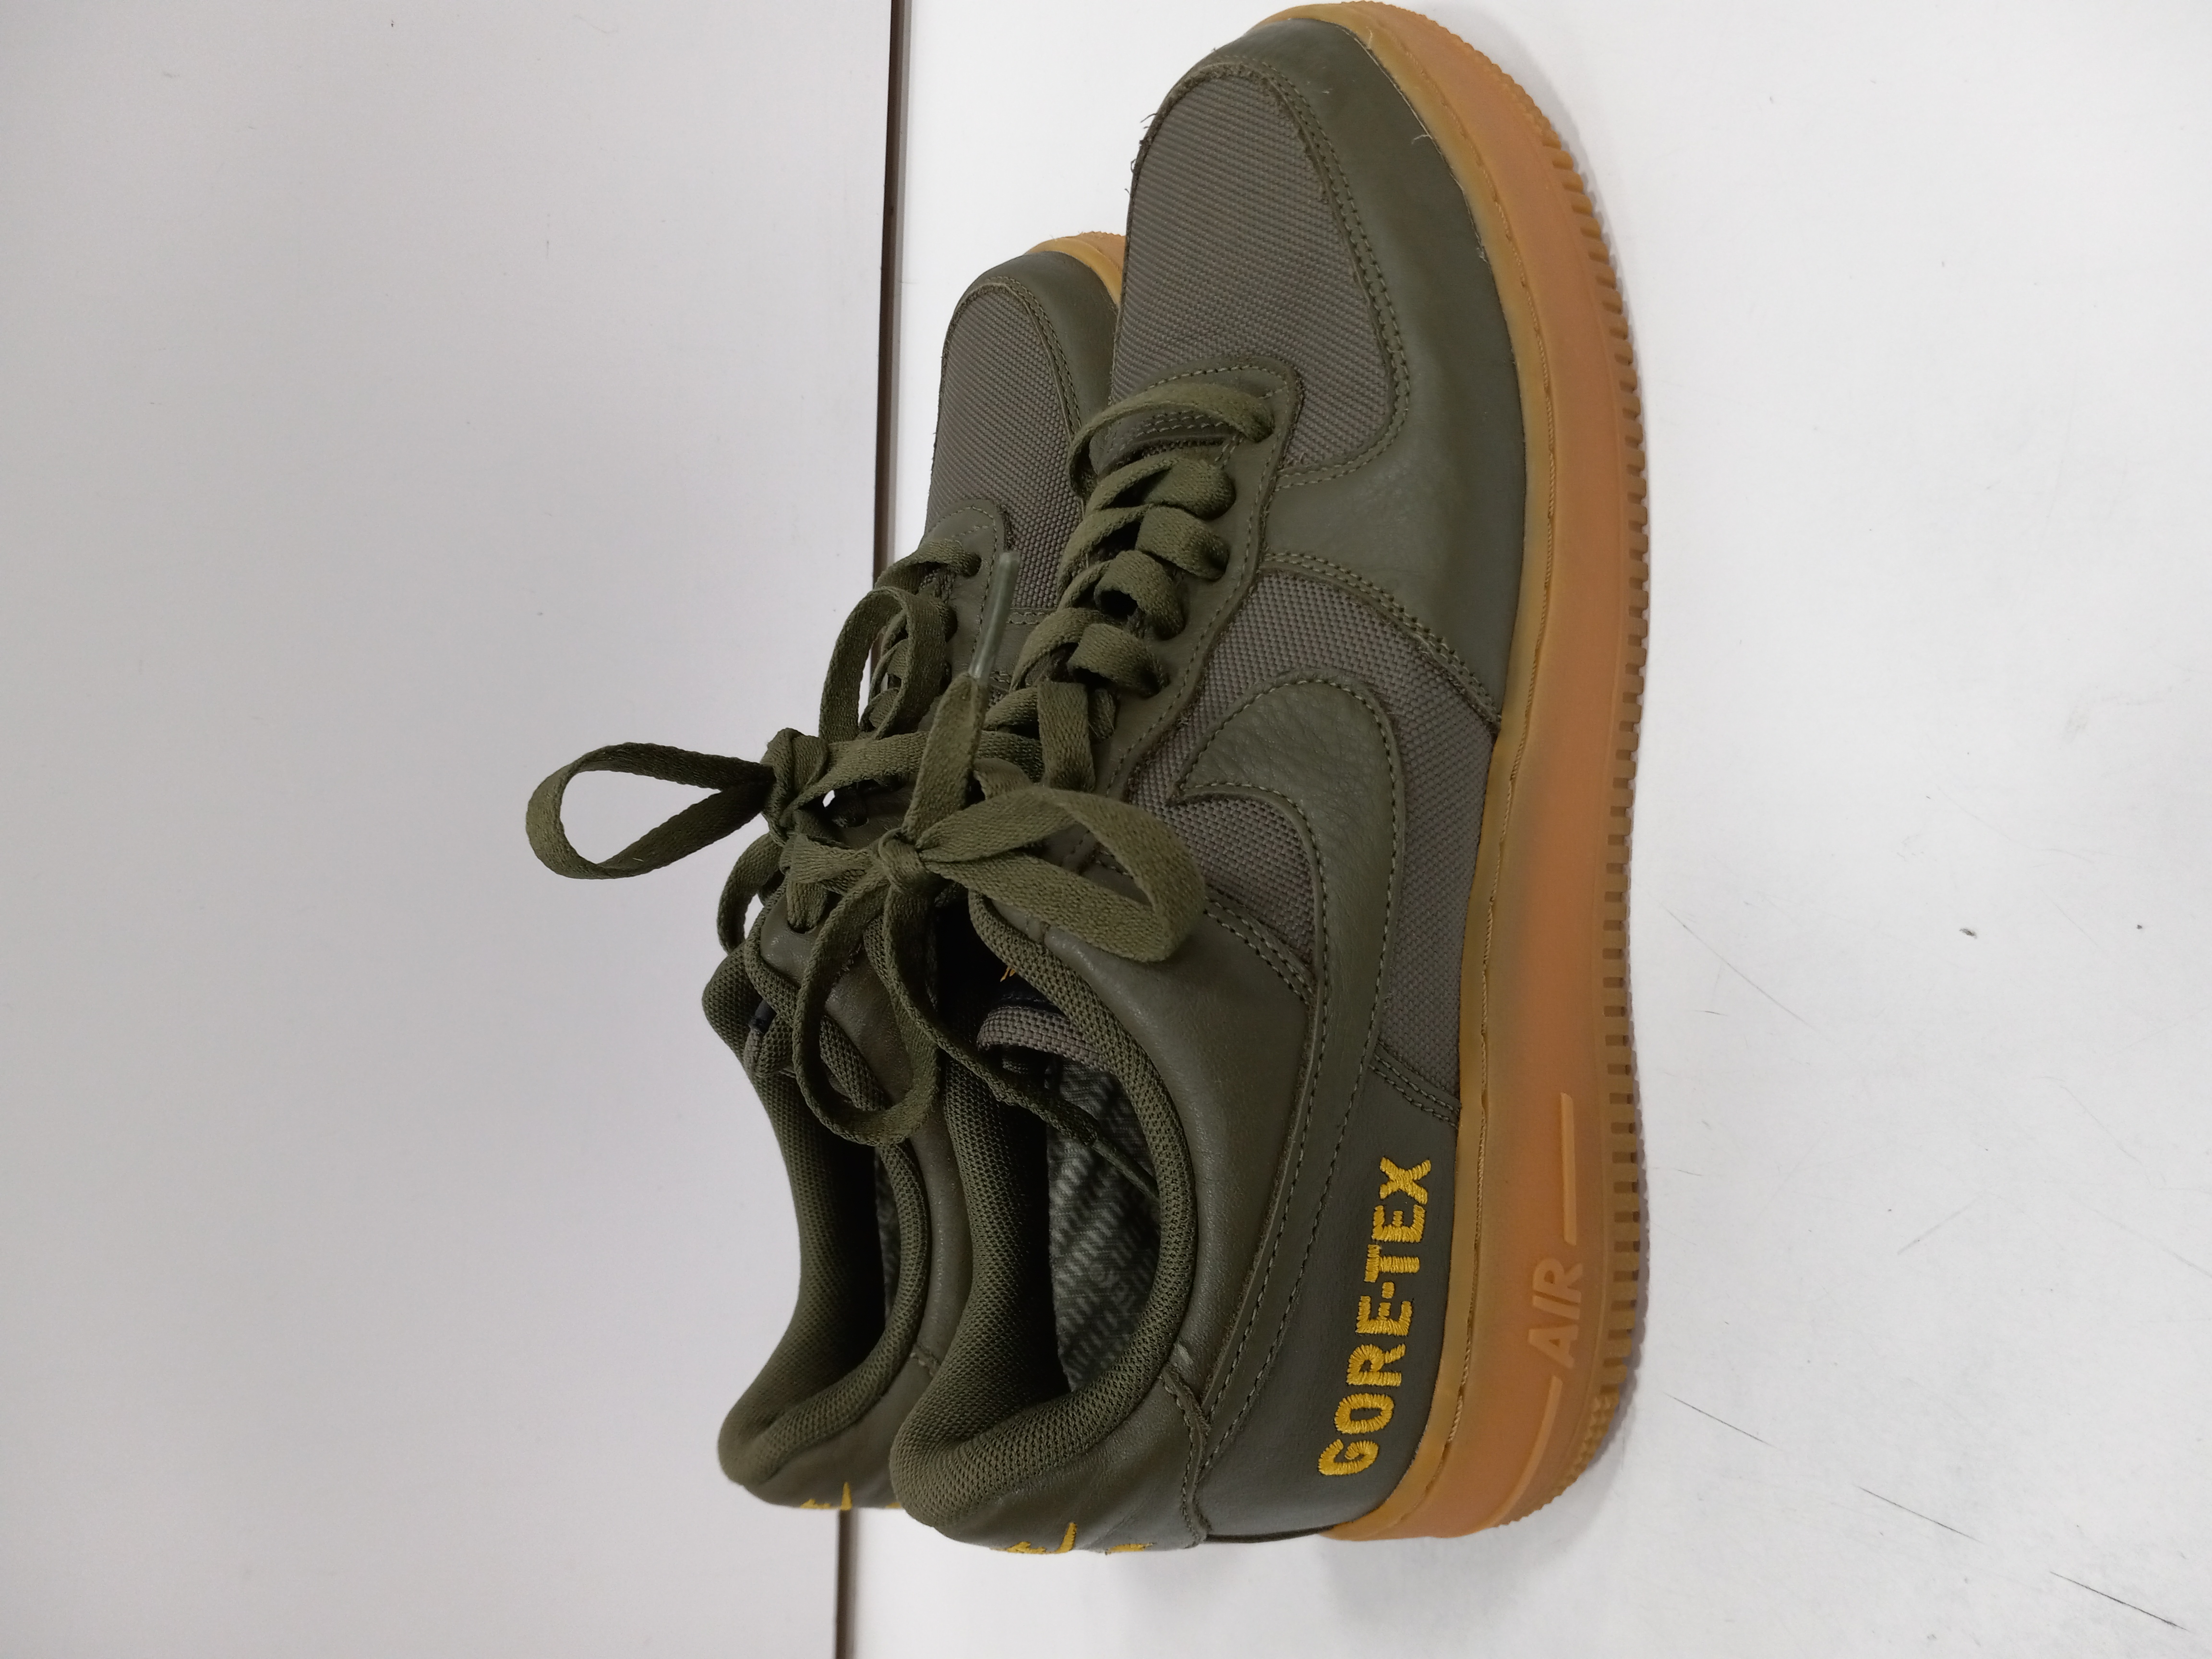 Nike Air Force 1 GORE-TEX Shoe